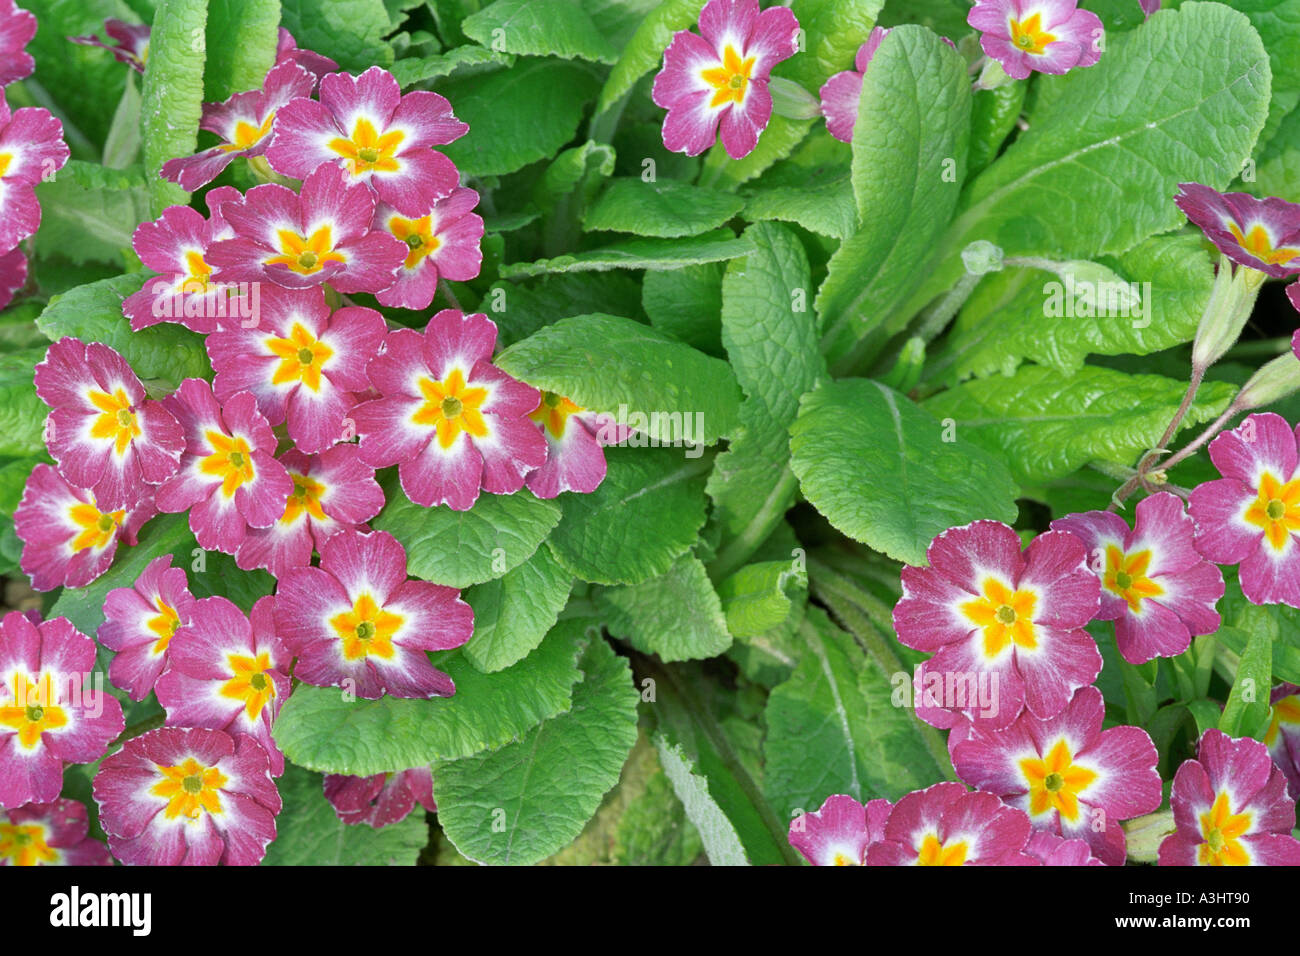 Close up of primula flowers and leaves. Scientific name: Primula vulgaris, syn. Primula acaulis. Stock Photo